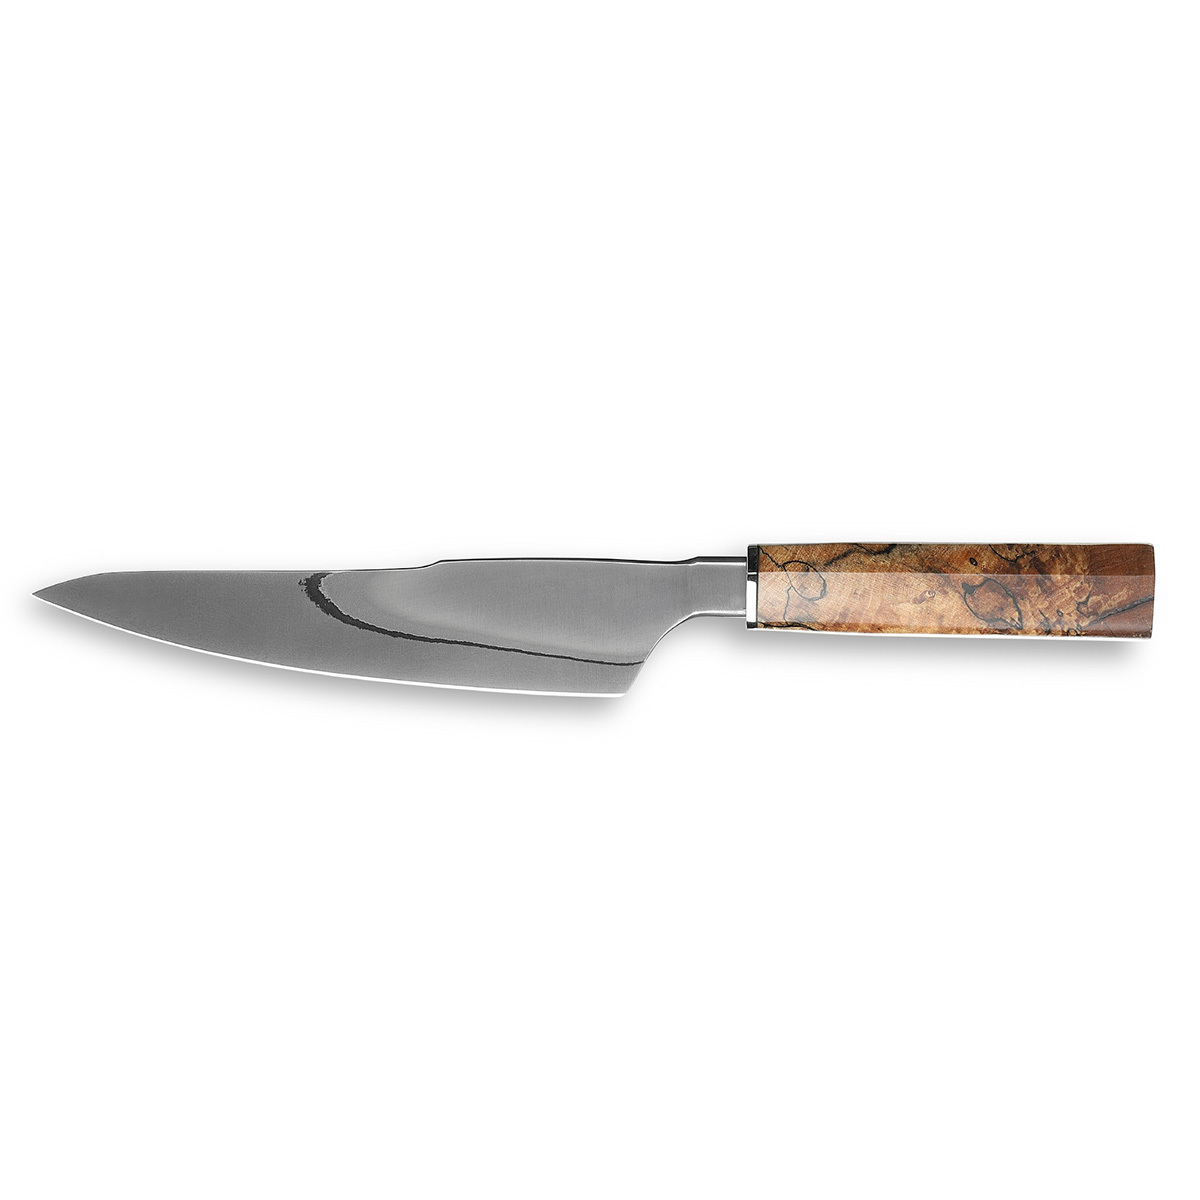 Нож кухонный Xin Cutlery Chef XC135 214мм, сталь 440C/410, рукоять Spalted Maple